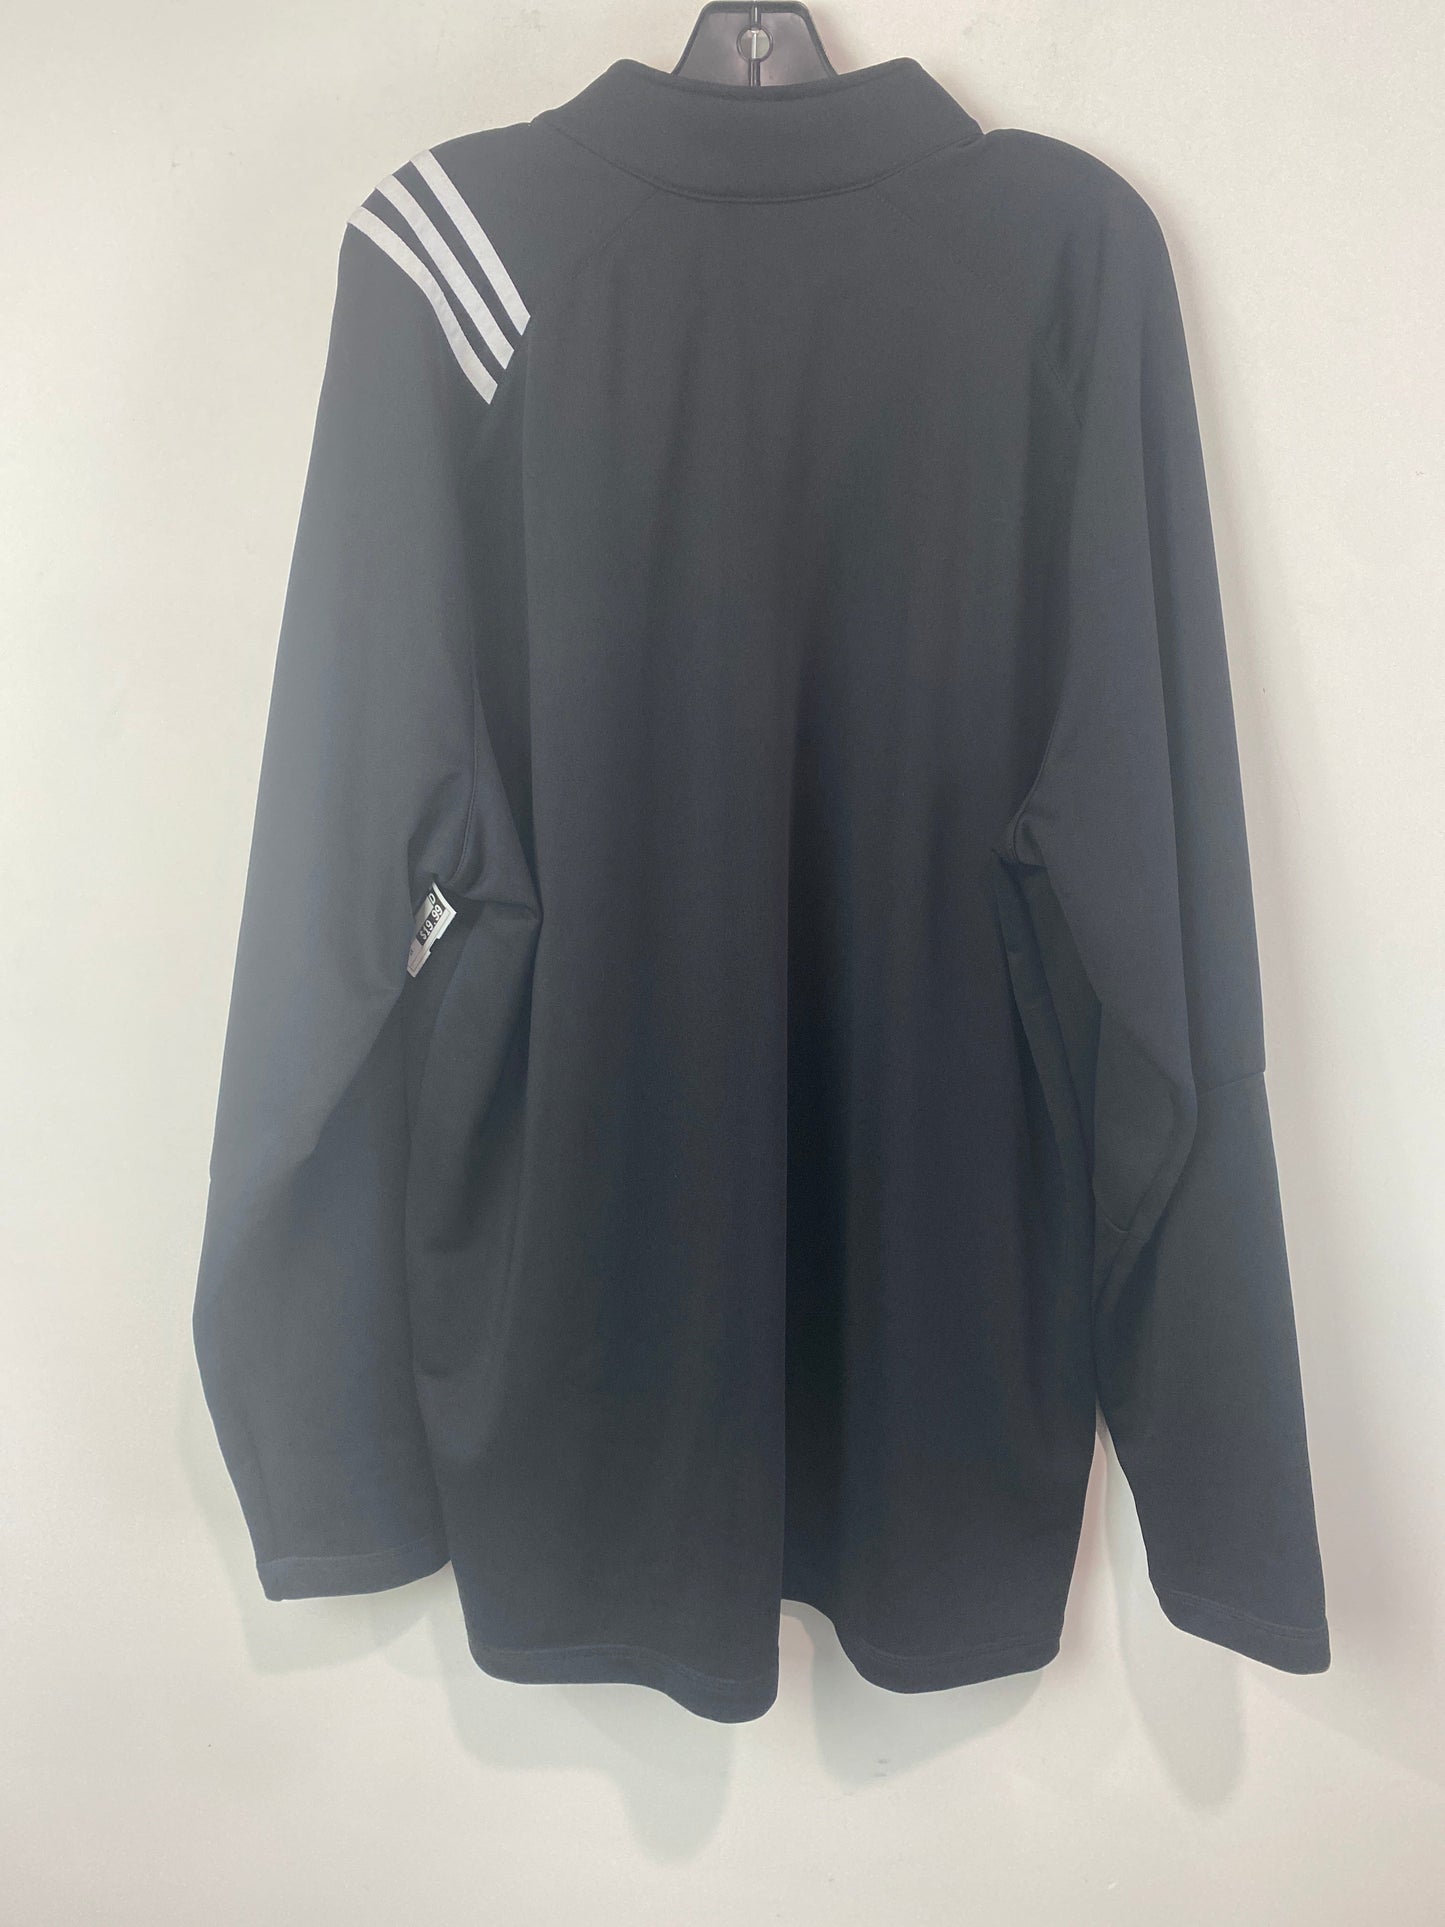 Athletic Fleece By Adidas  Size: 2x